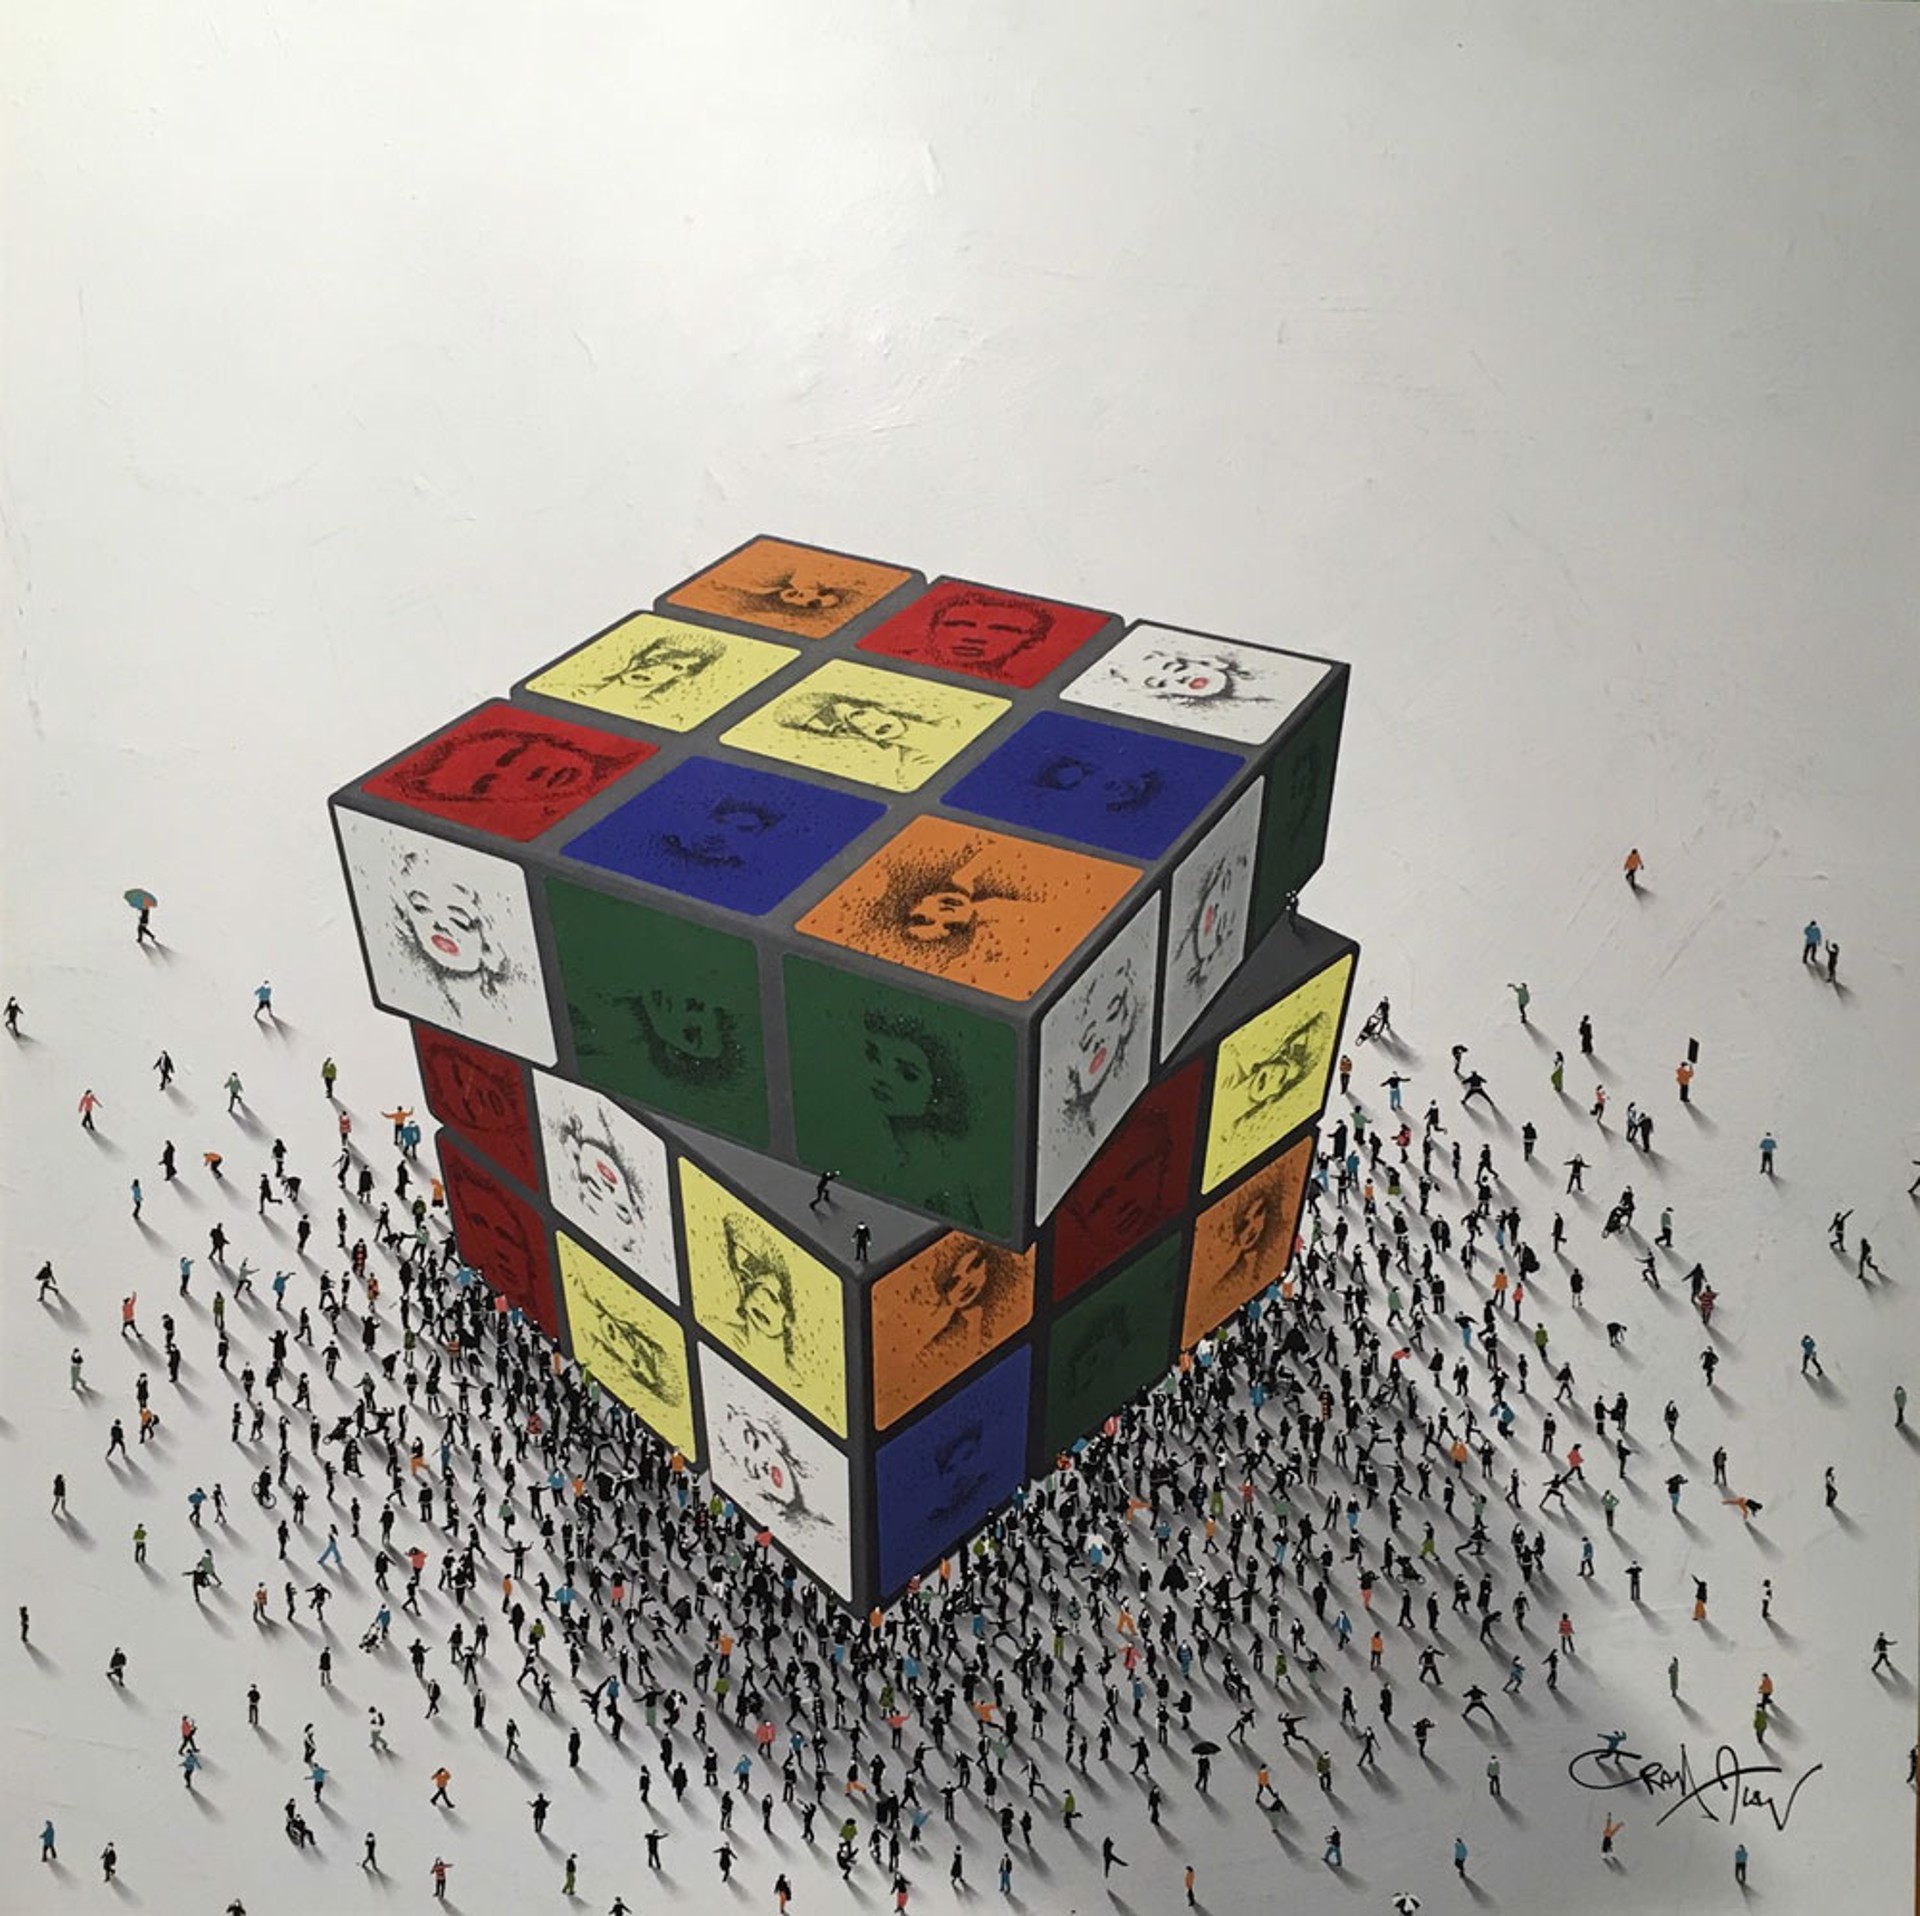 Cubed Culture by Craig Alan, Populus